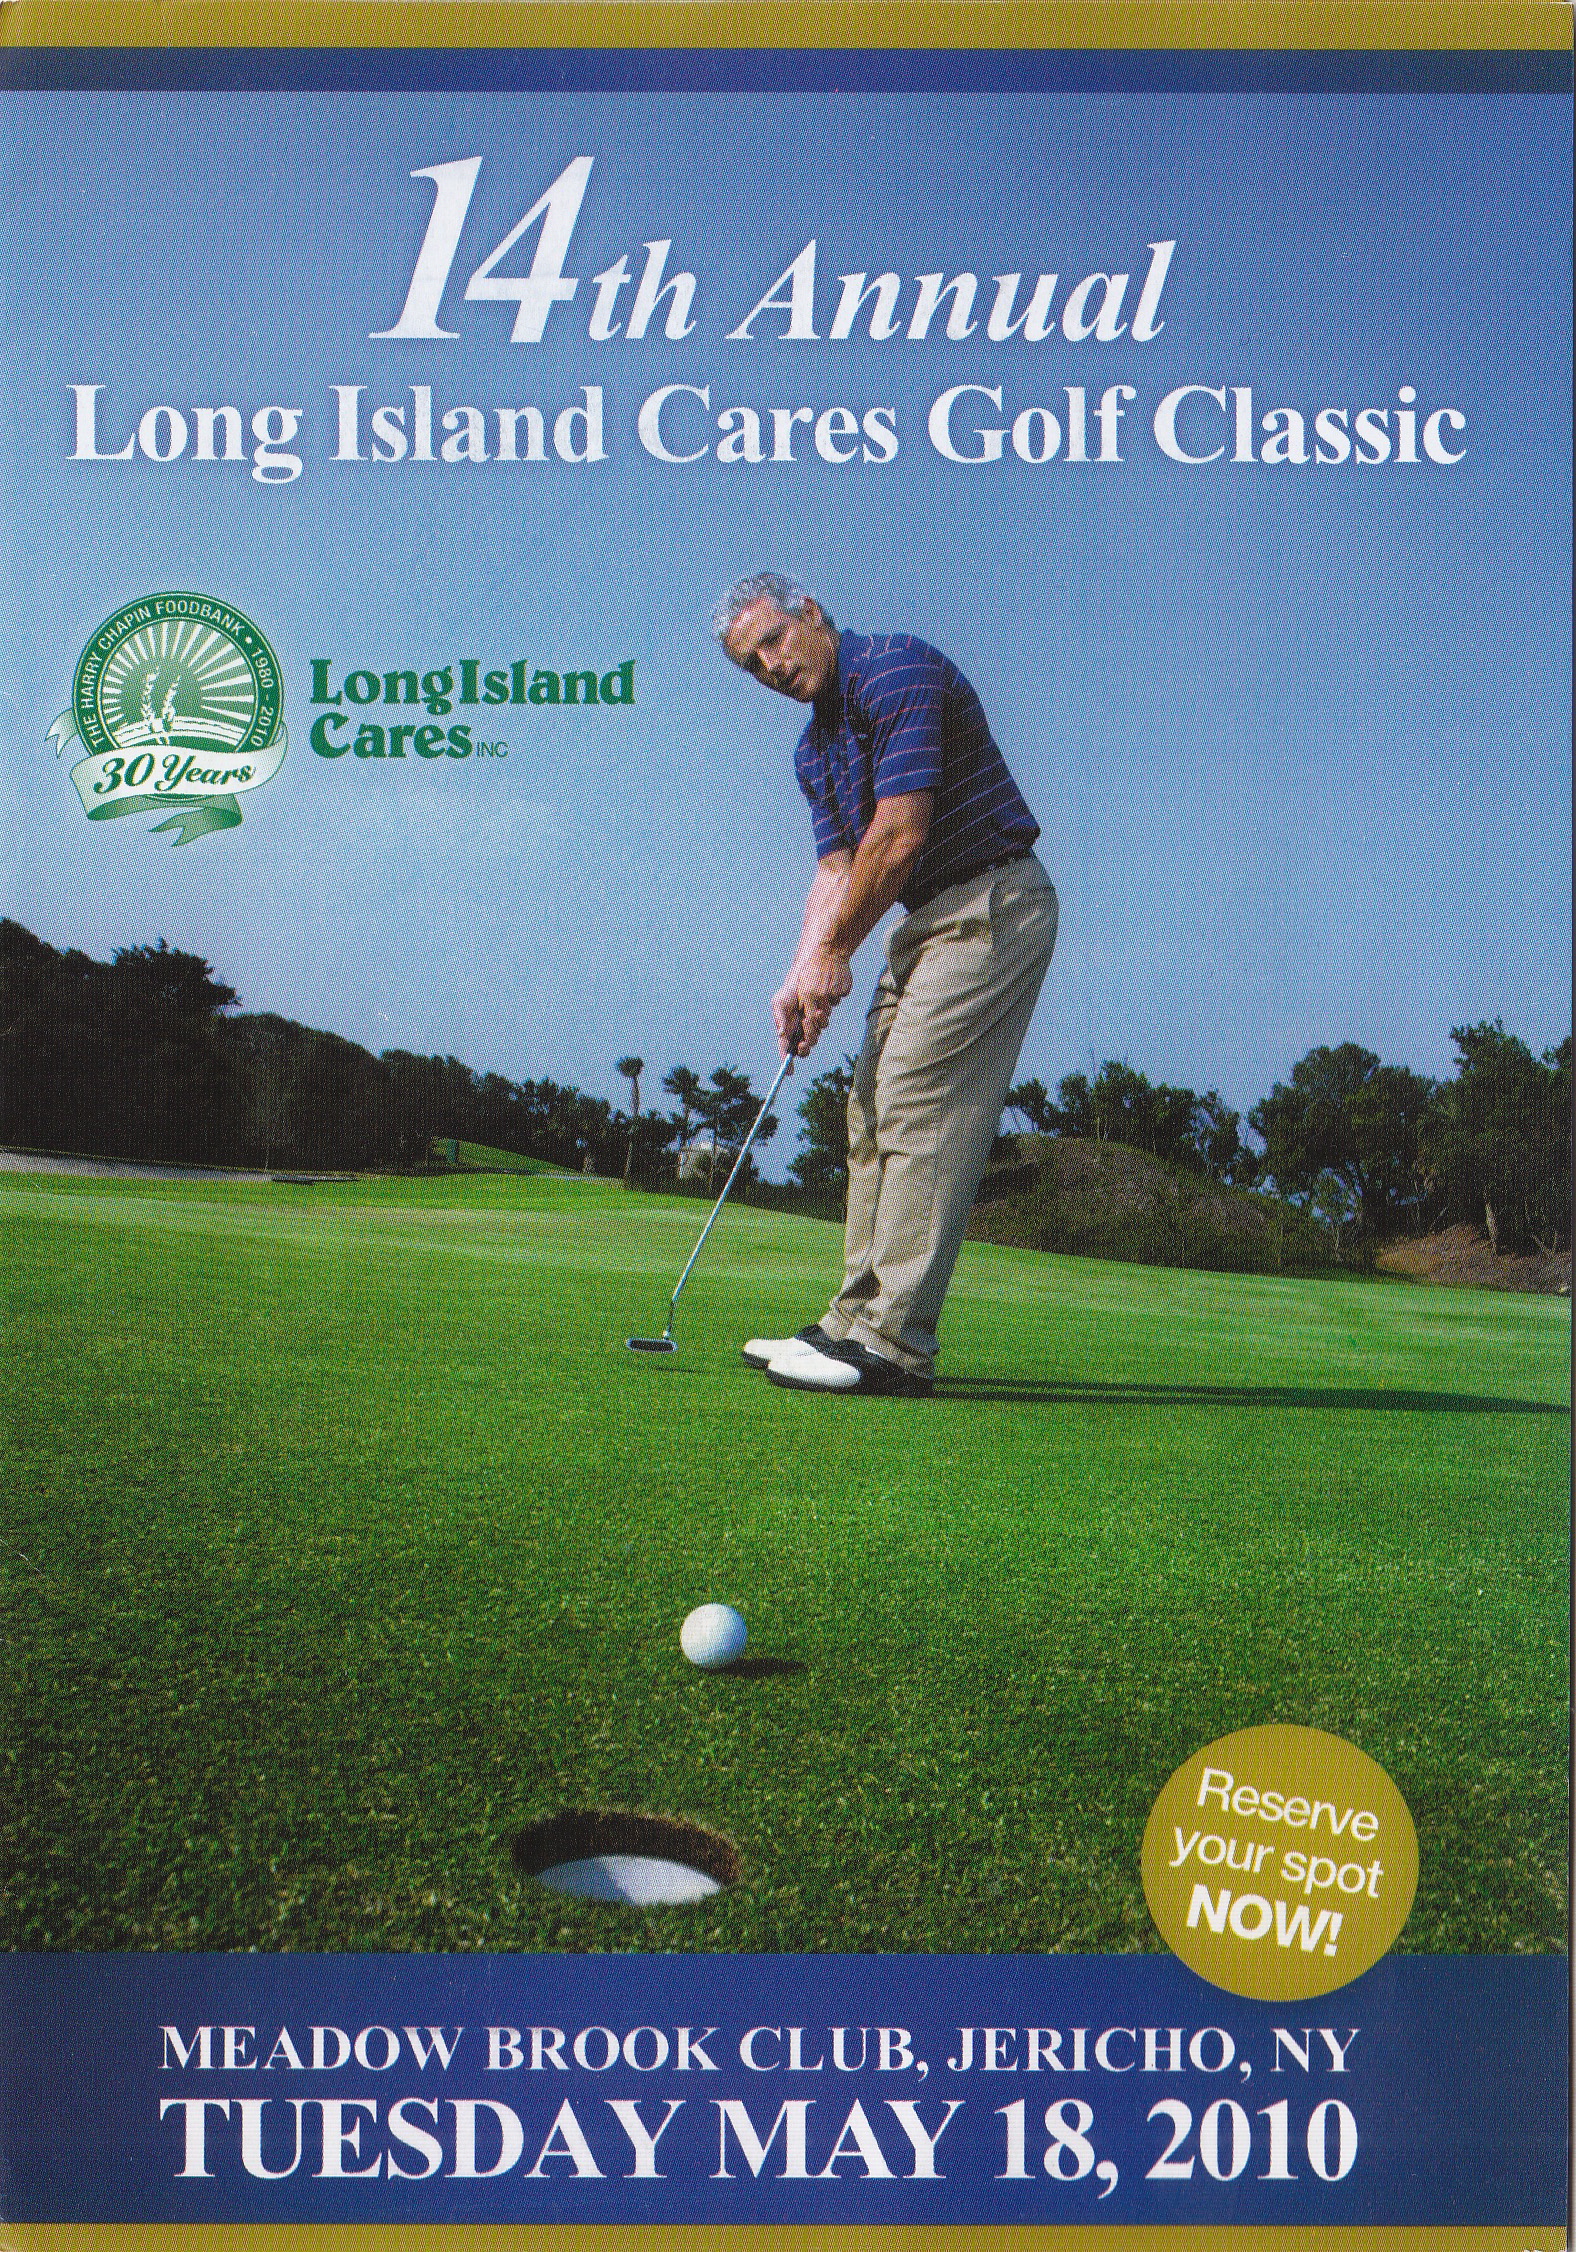 Jeff Joslin Golf print ad.